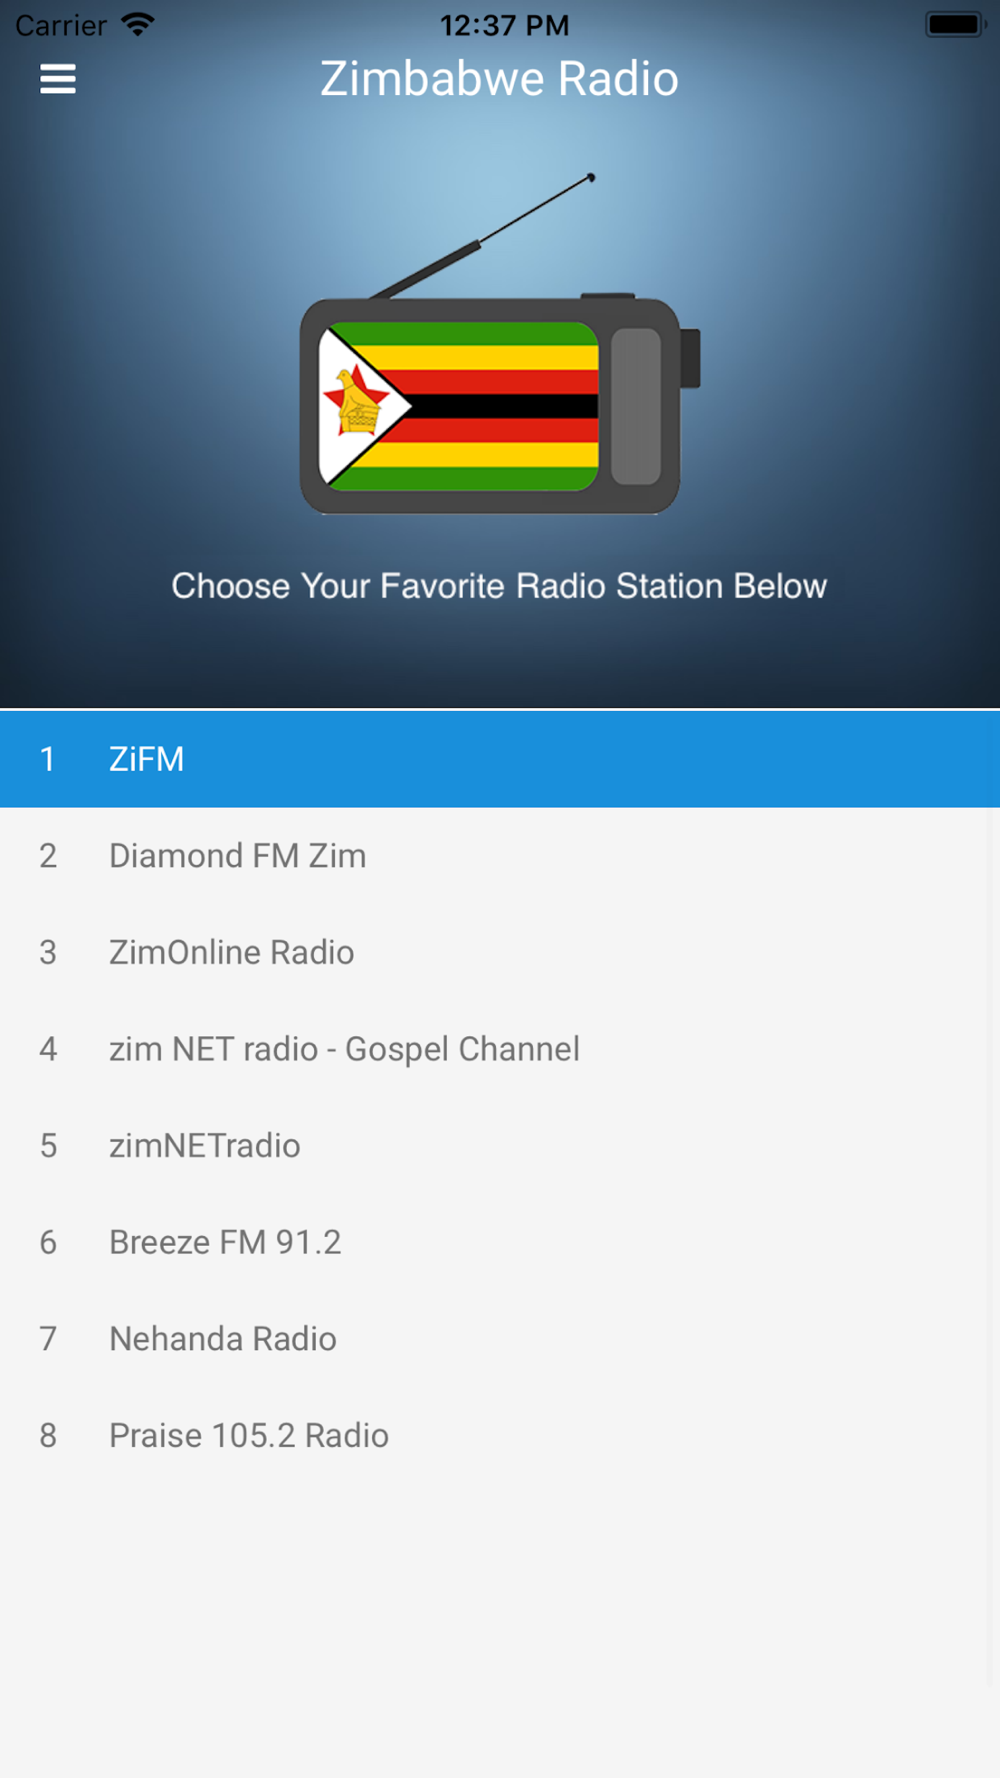 Zimbabwe Radio Station FM Live Free Download App for iPhone - STEPrimo.com